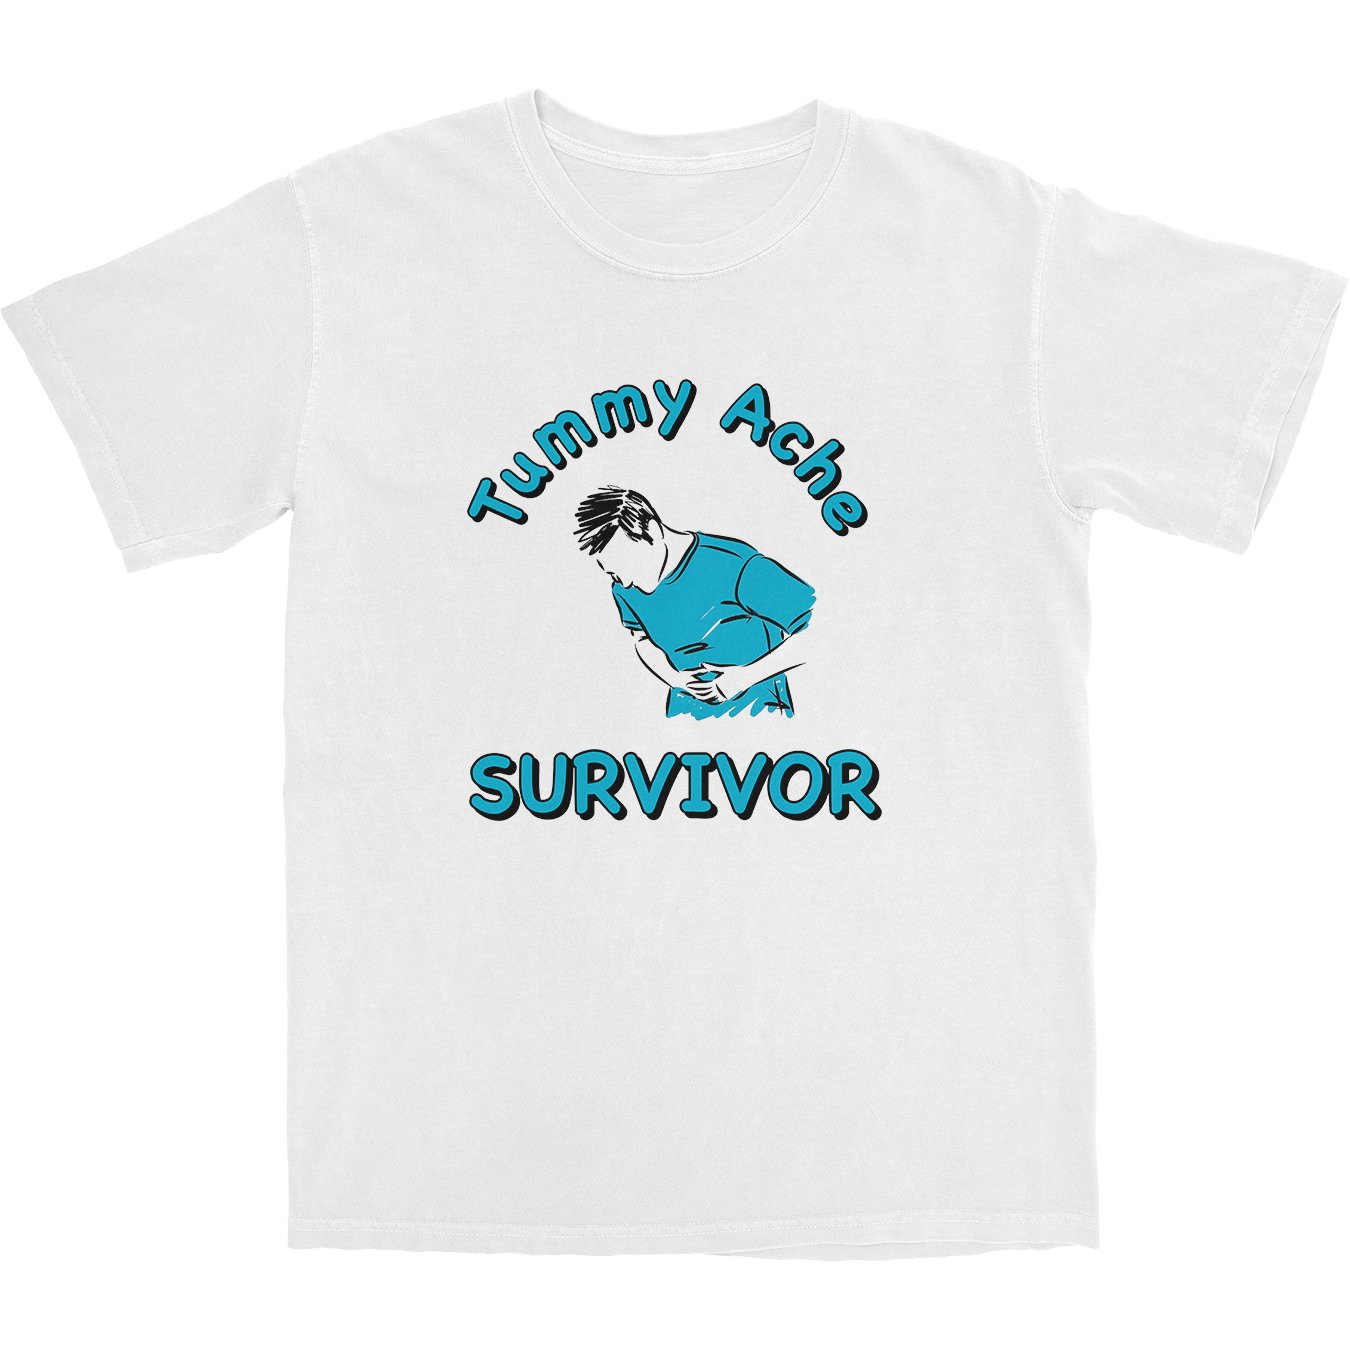 Tummy Ache Survivor T Shirt - Shitheadsteve